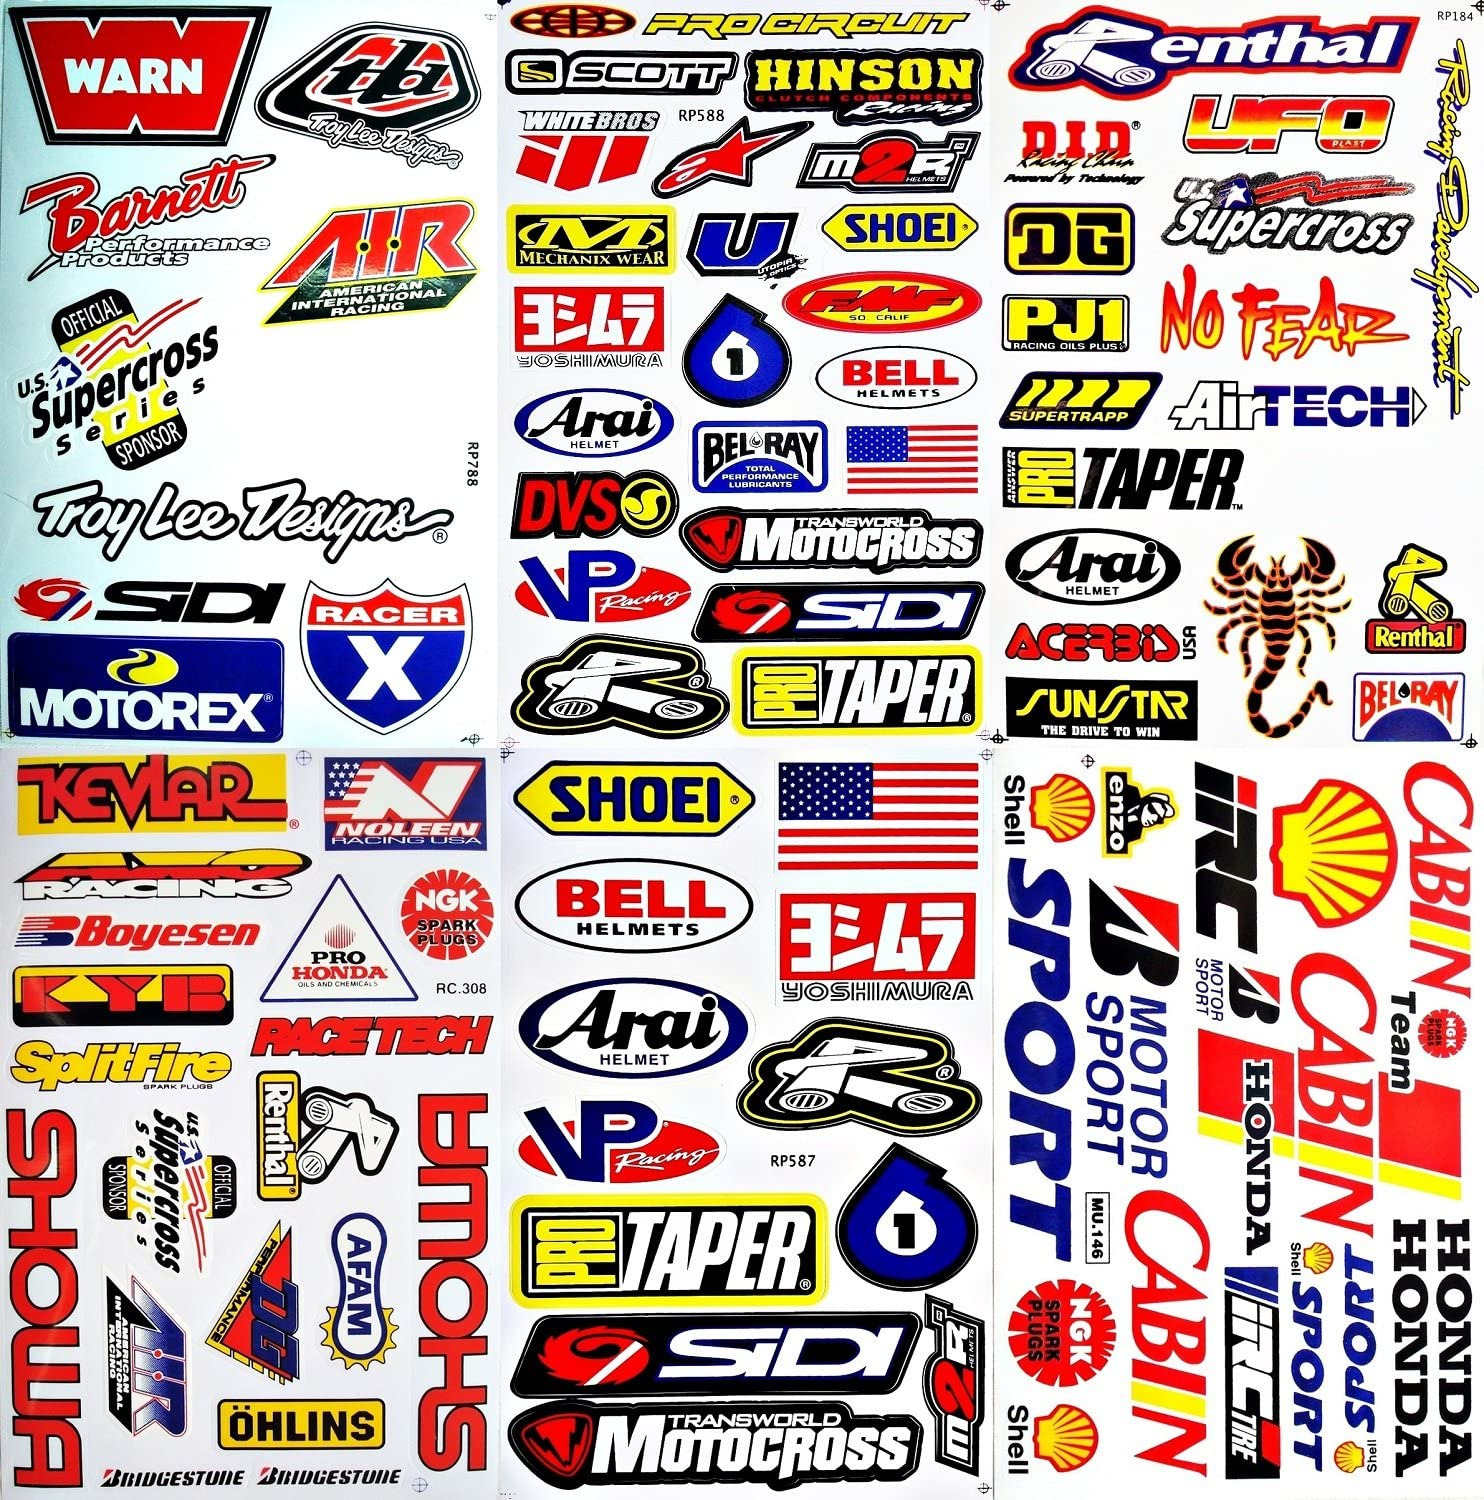 Dirt Bike Motorcycles Supercross Motocross ATV Lot 6 vinyl decals stickers D6015